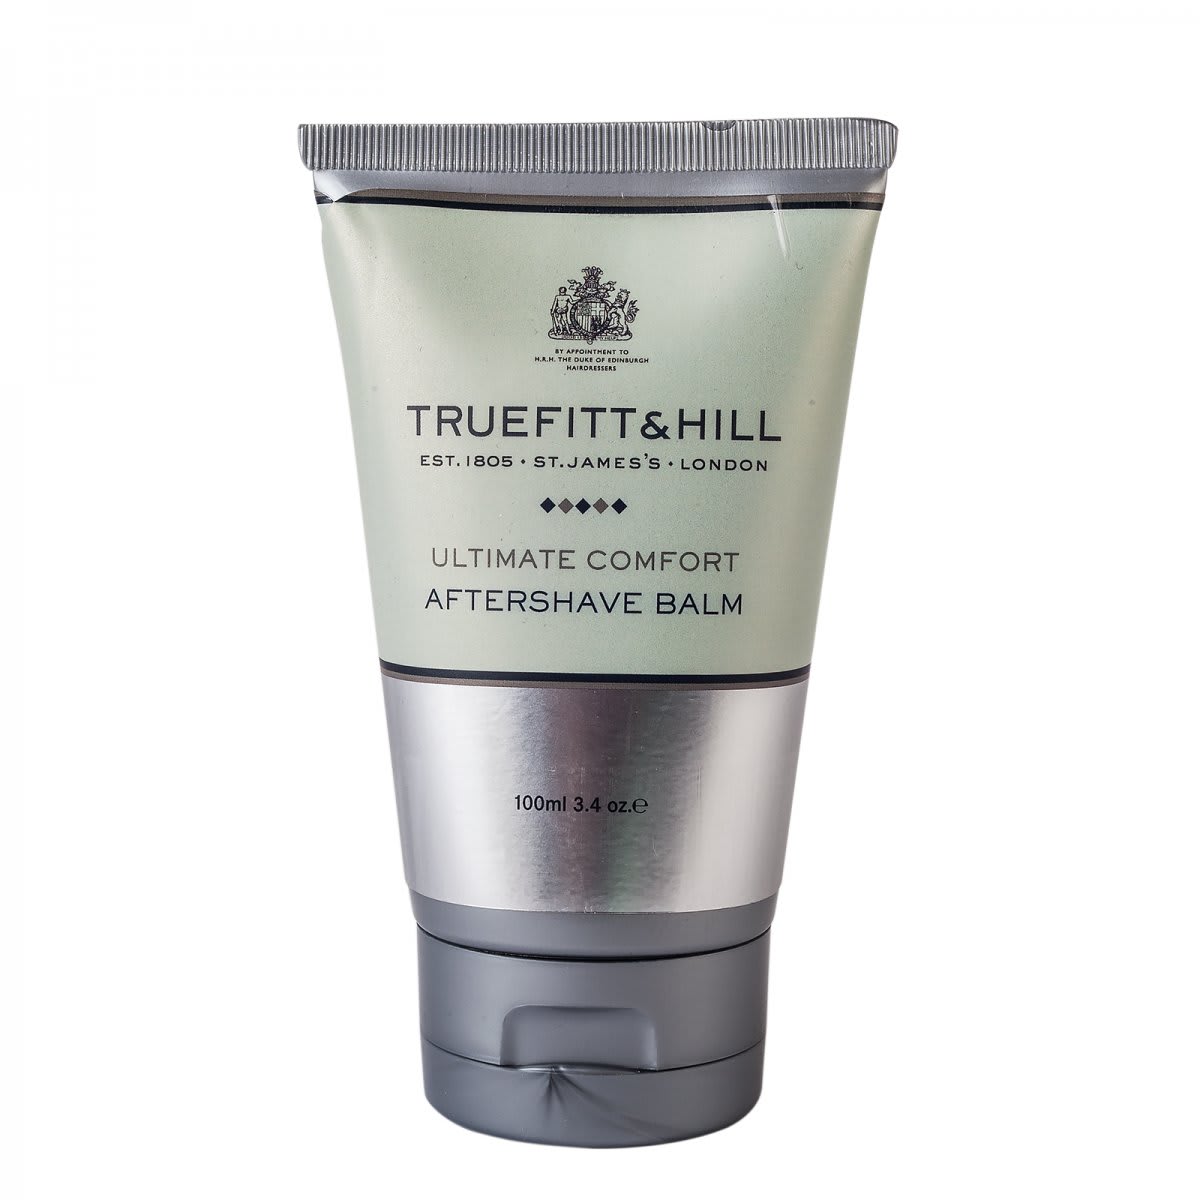 Truefitt & Hill Ultimate Comfort Aftershave Balm